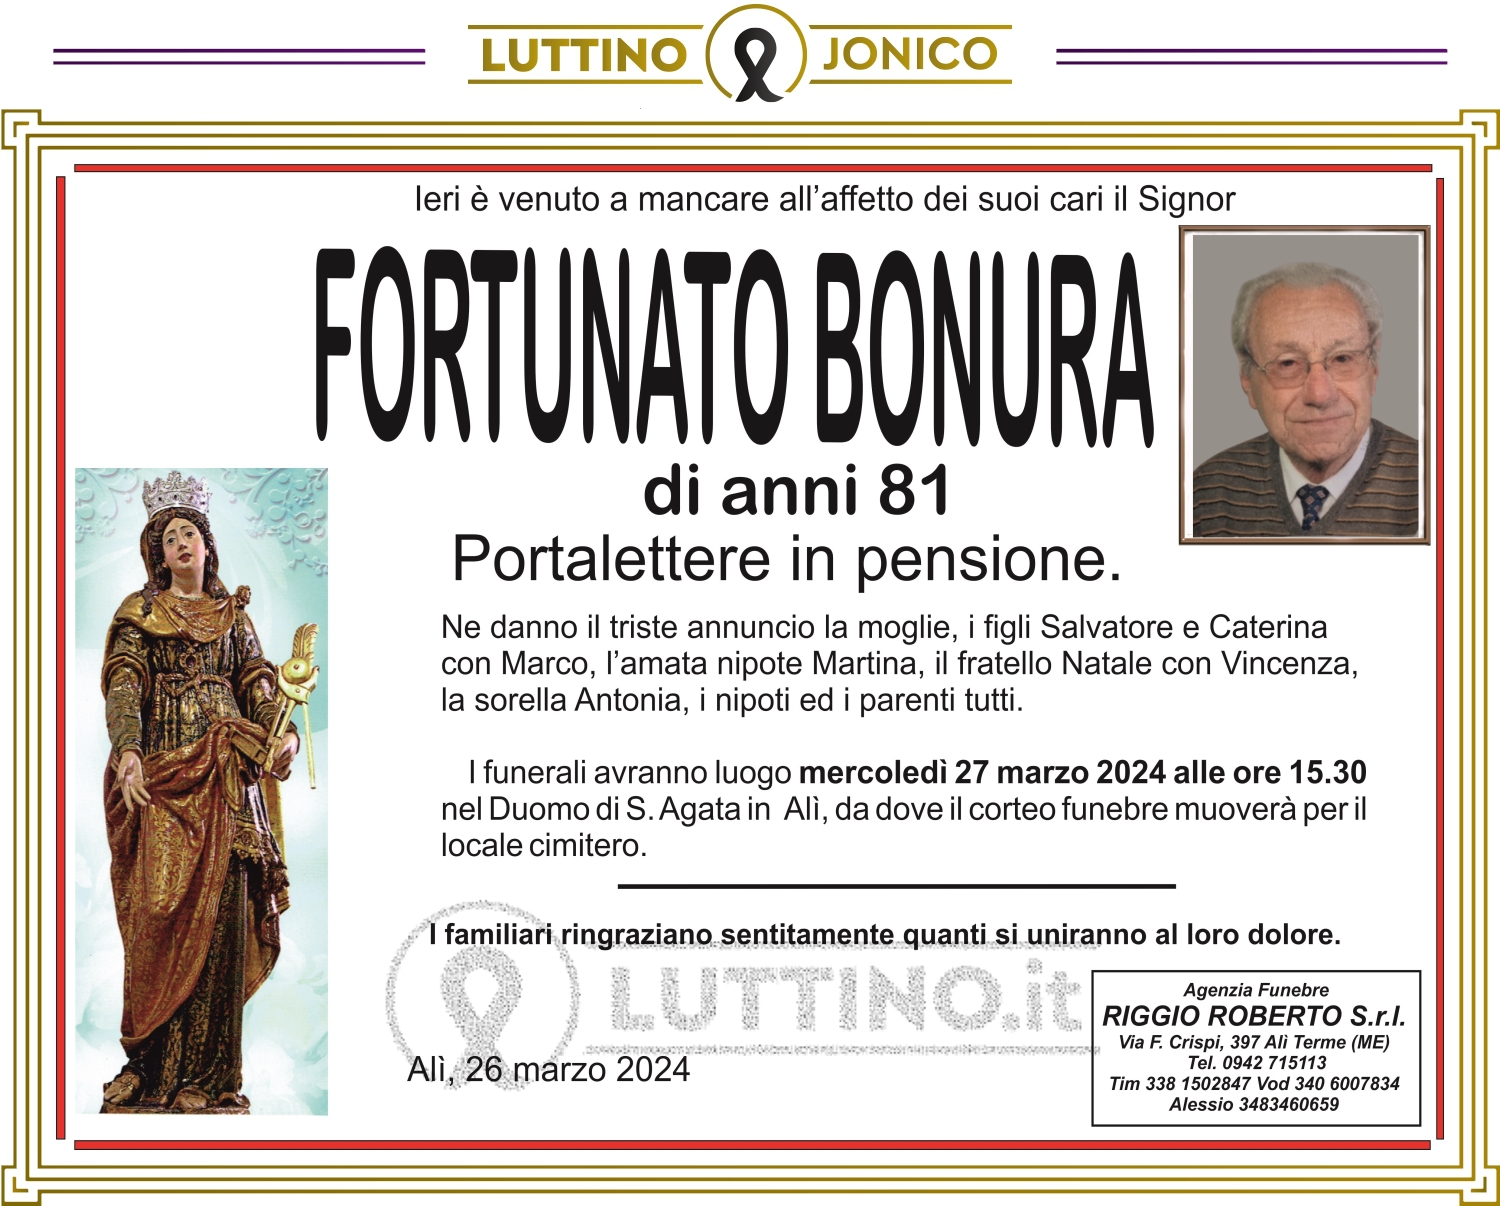 Fortunato Bonura